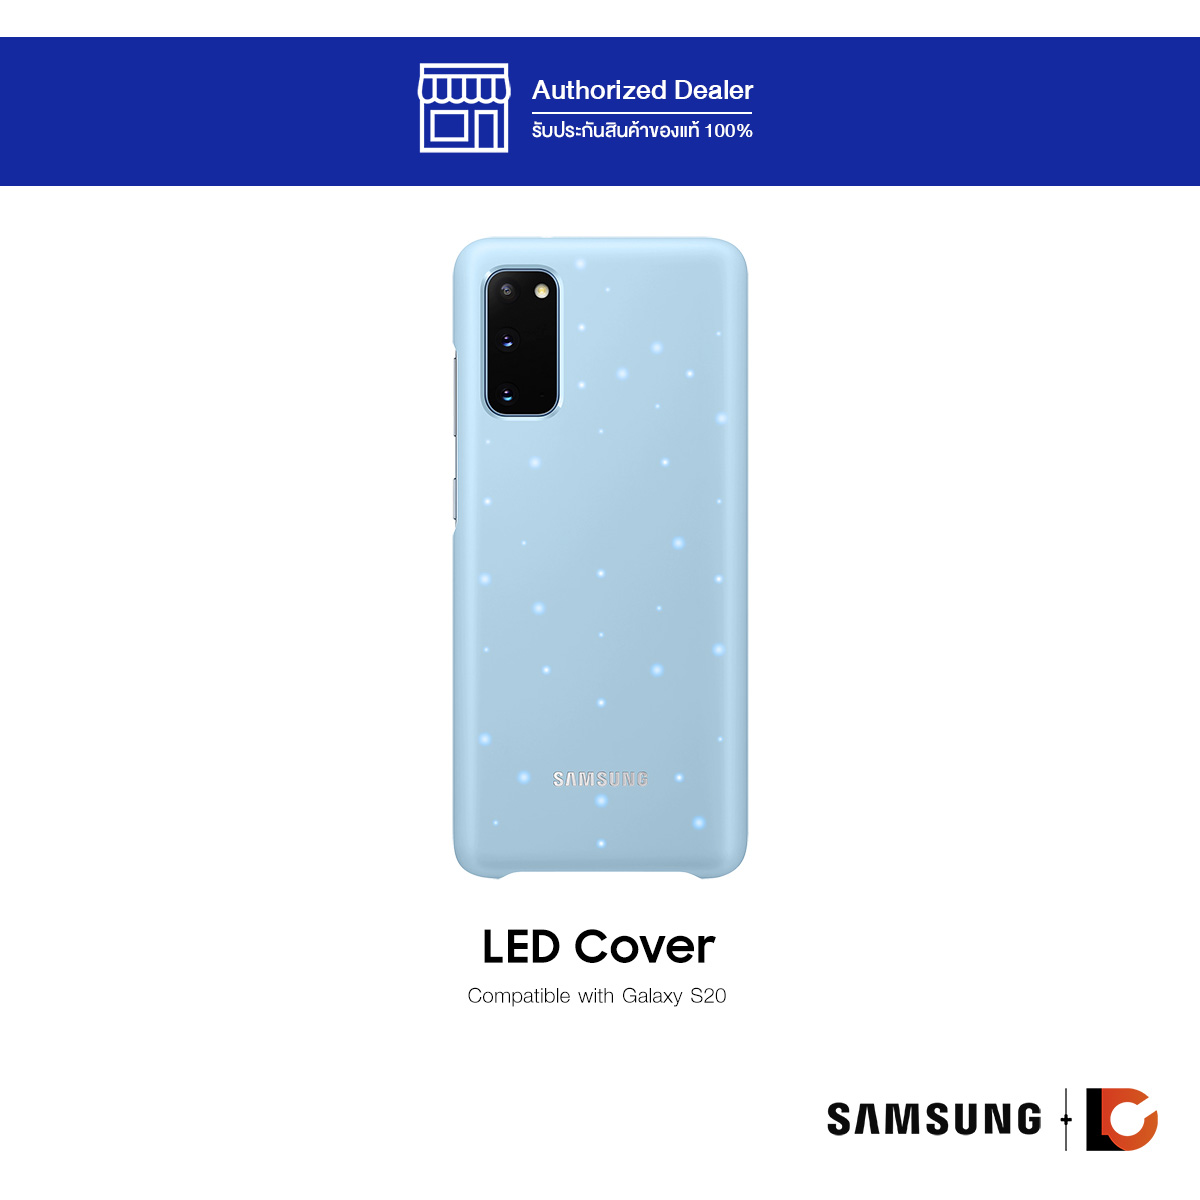 SAMSUNG Galaxy S20 LED Cover | เคสสำหรับ Galaxy S20 LED Cover *ไม่รวมตัวเครื่อง สี BLUE สี BLUEรูปแบบรุ่นที่ีรองรับ Samsung Galaxy S20